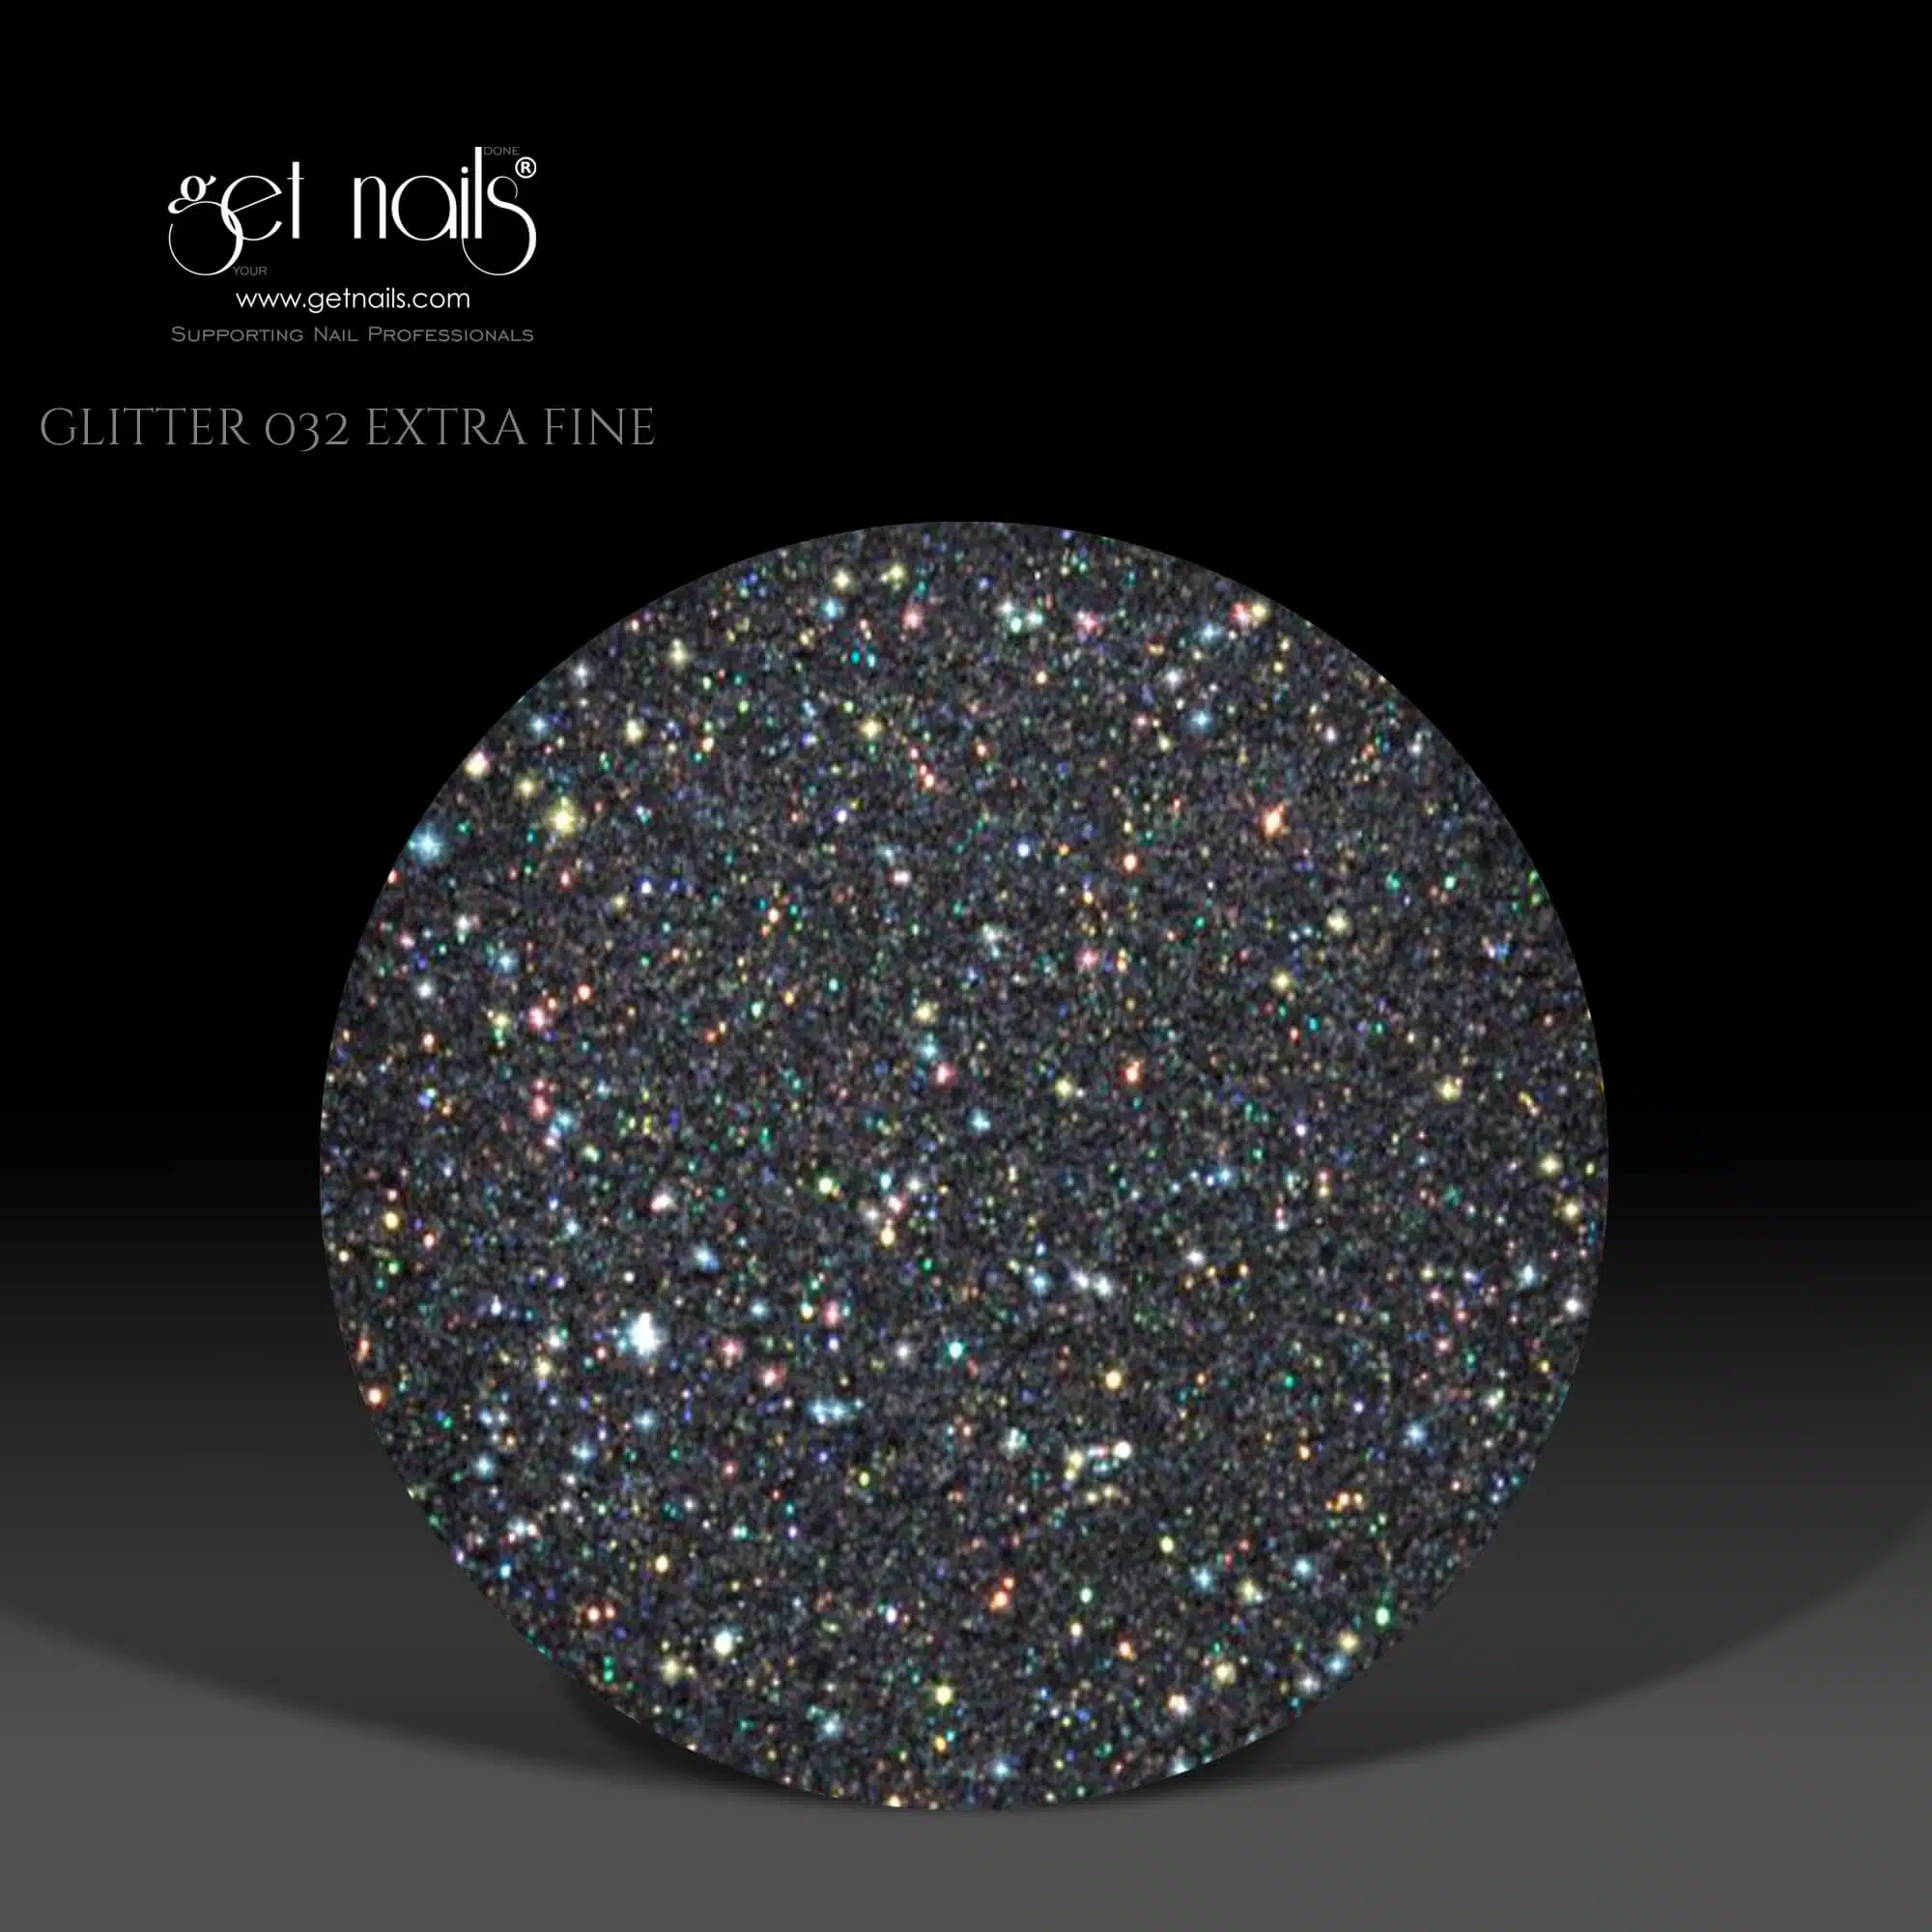 Get Nails Austria — Glitter 032 Угольно-радужный